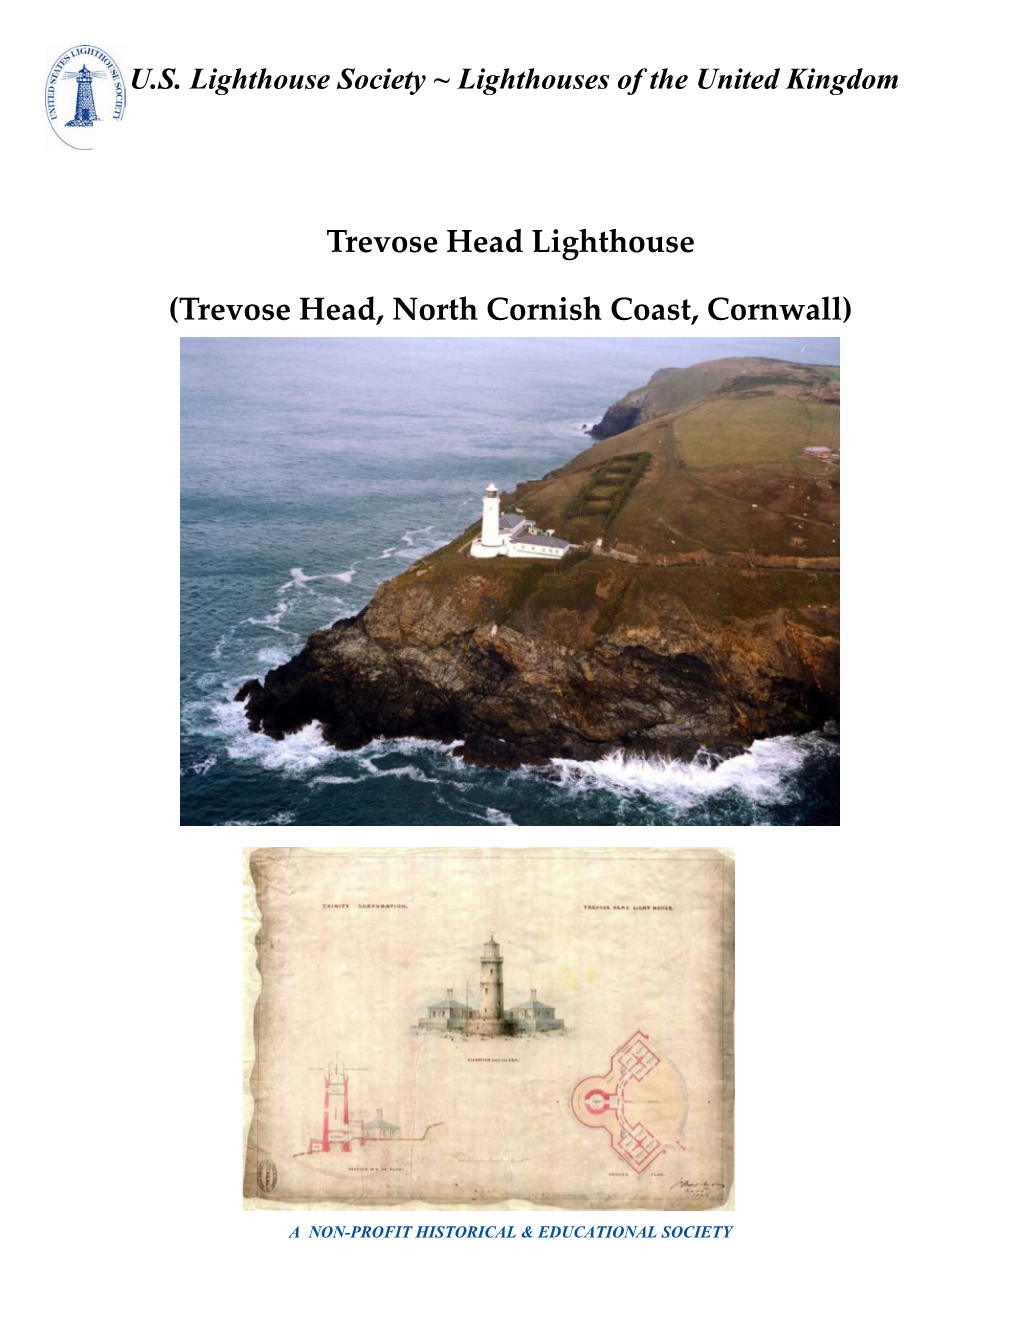 Trevose Head, North Cornish Coast, Cornwall)